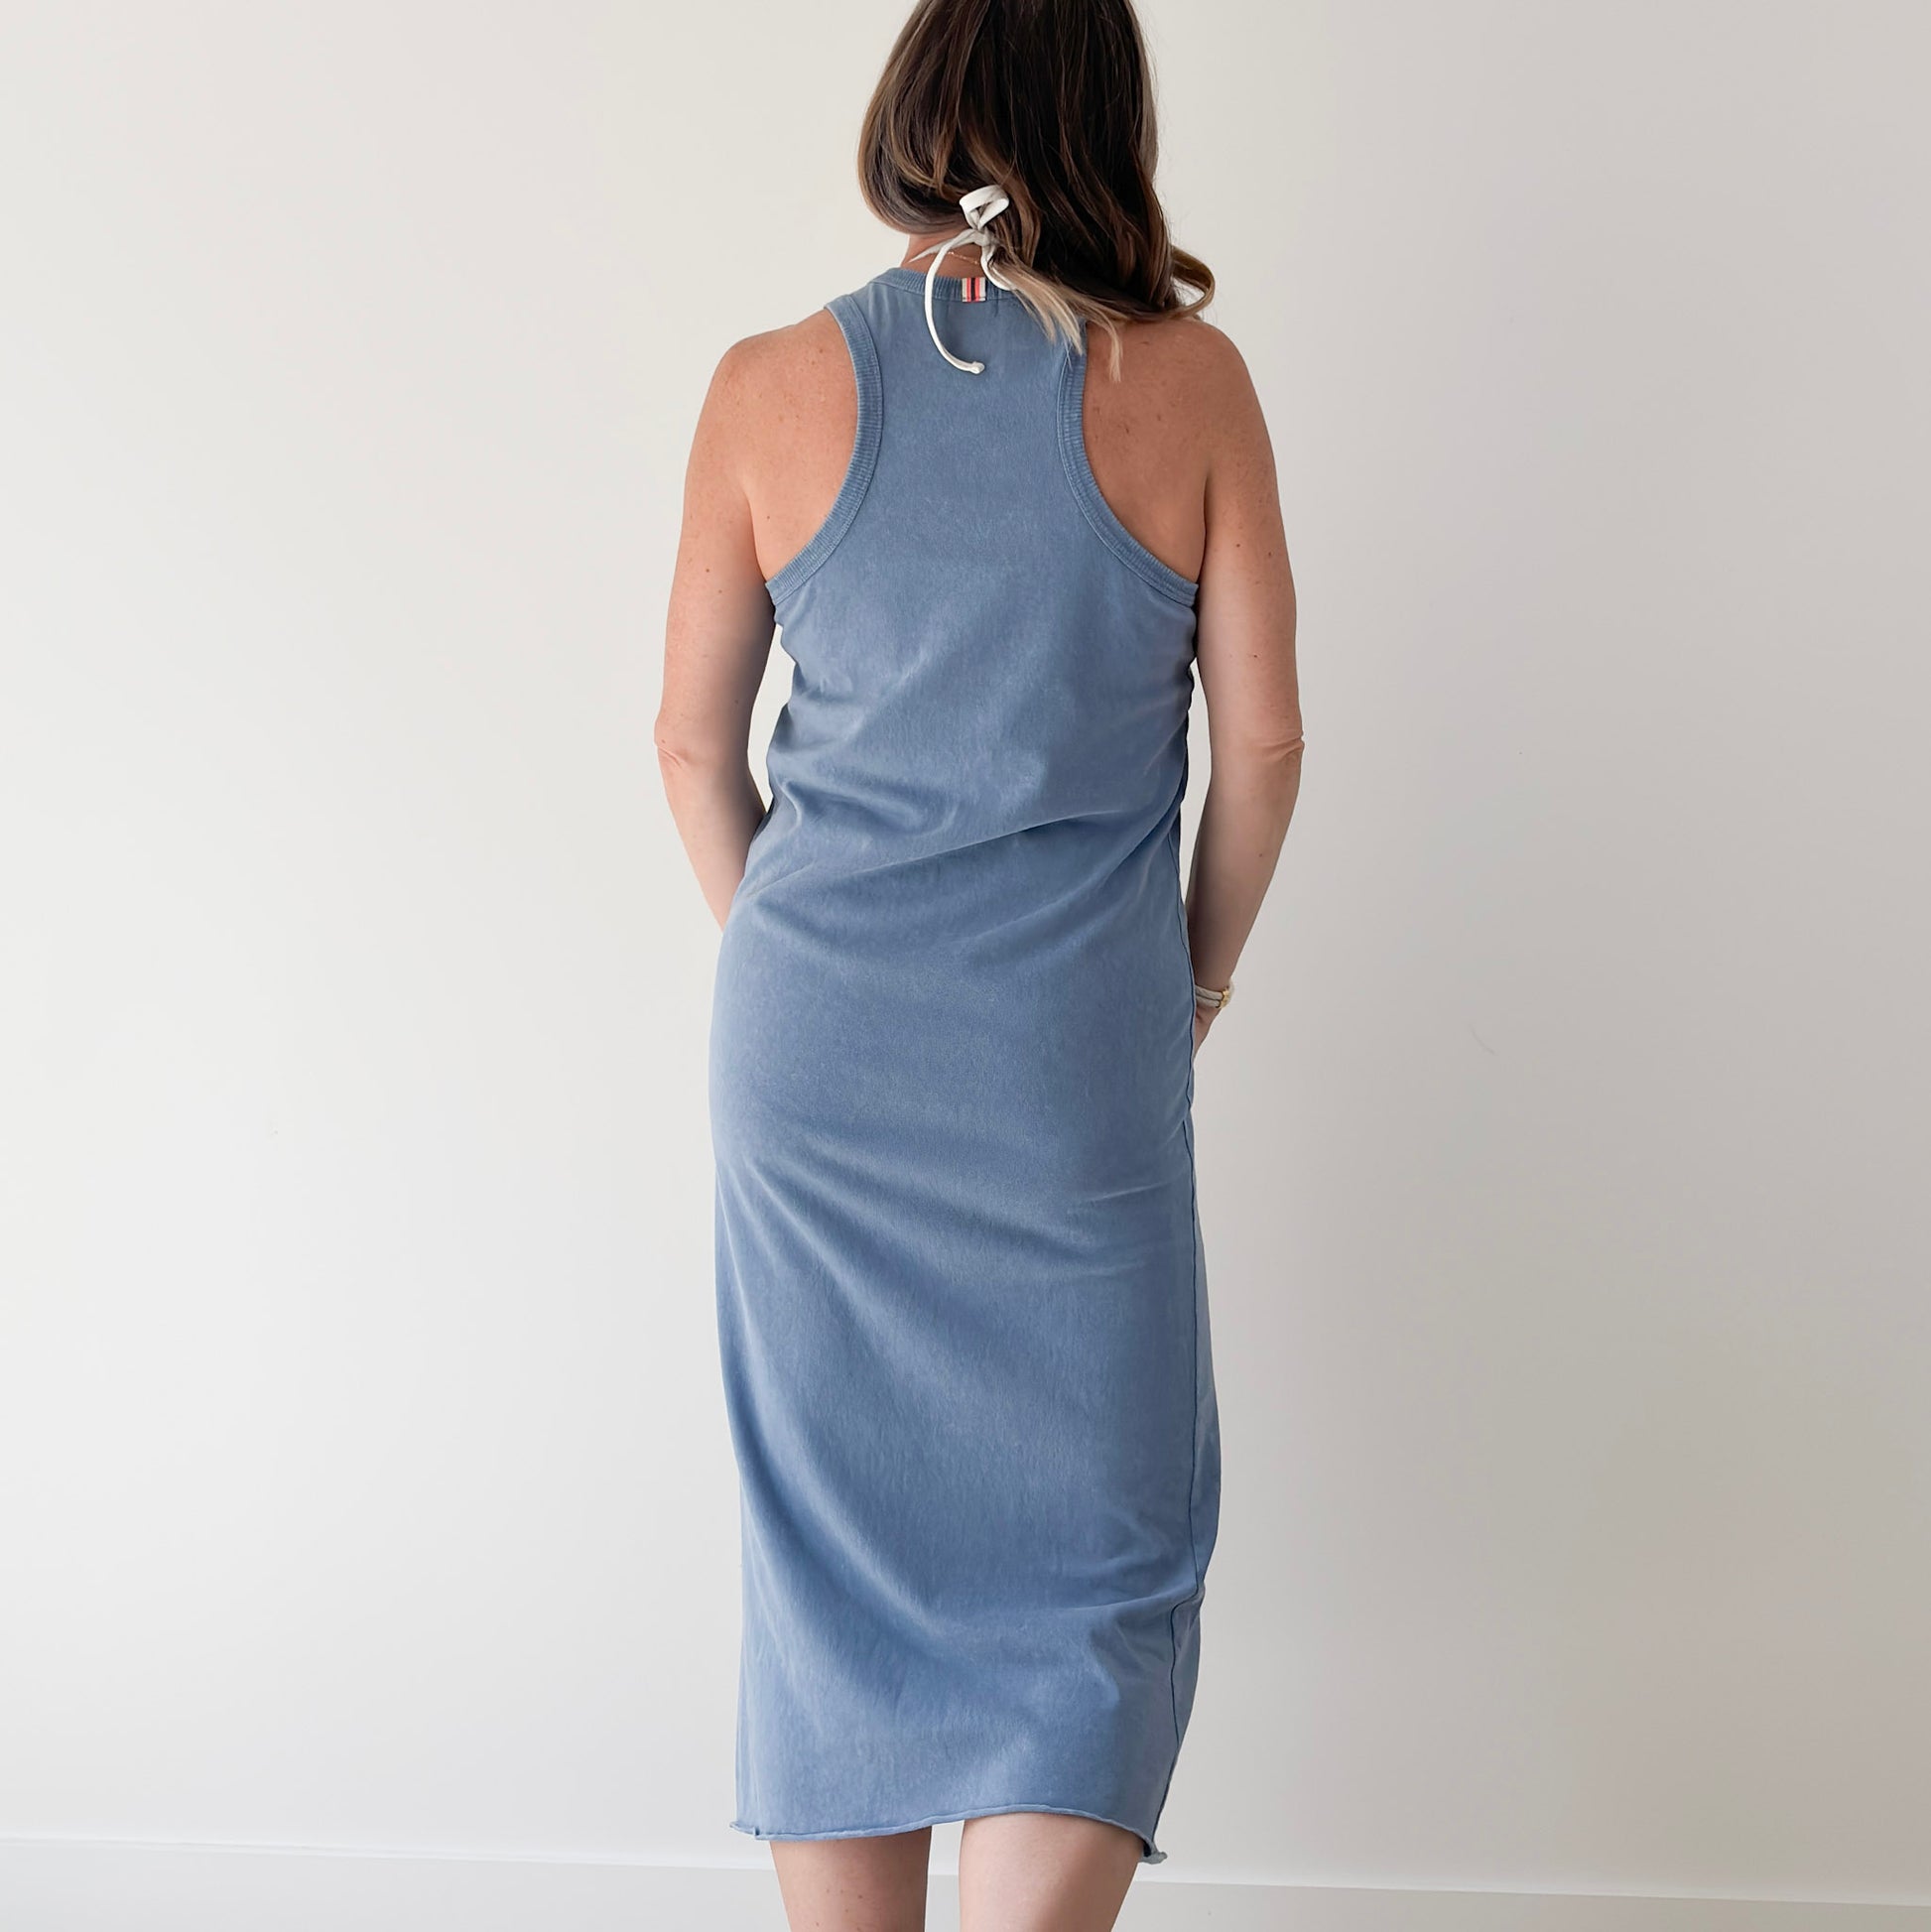 Women's grey blue knit tank racerback fitted midi dress with raw hem